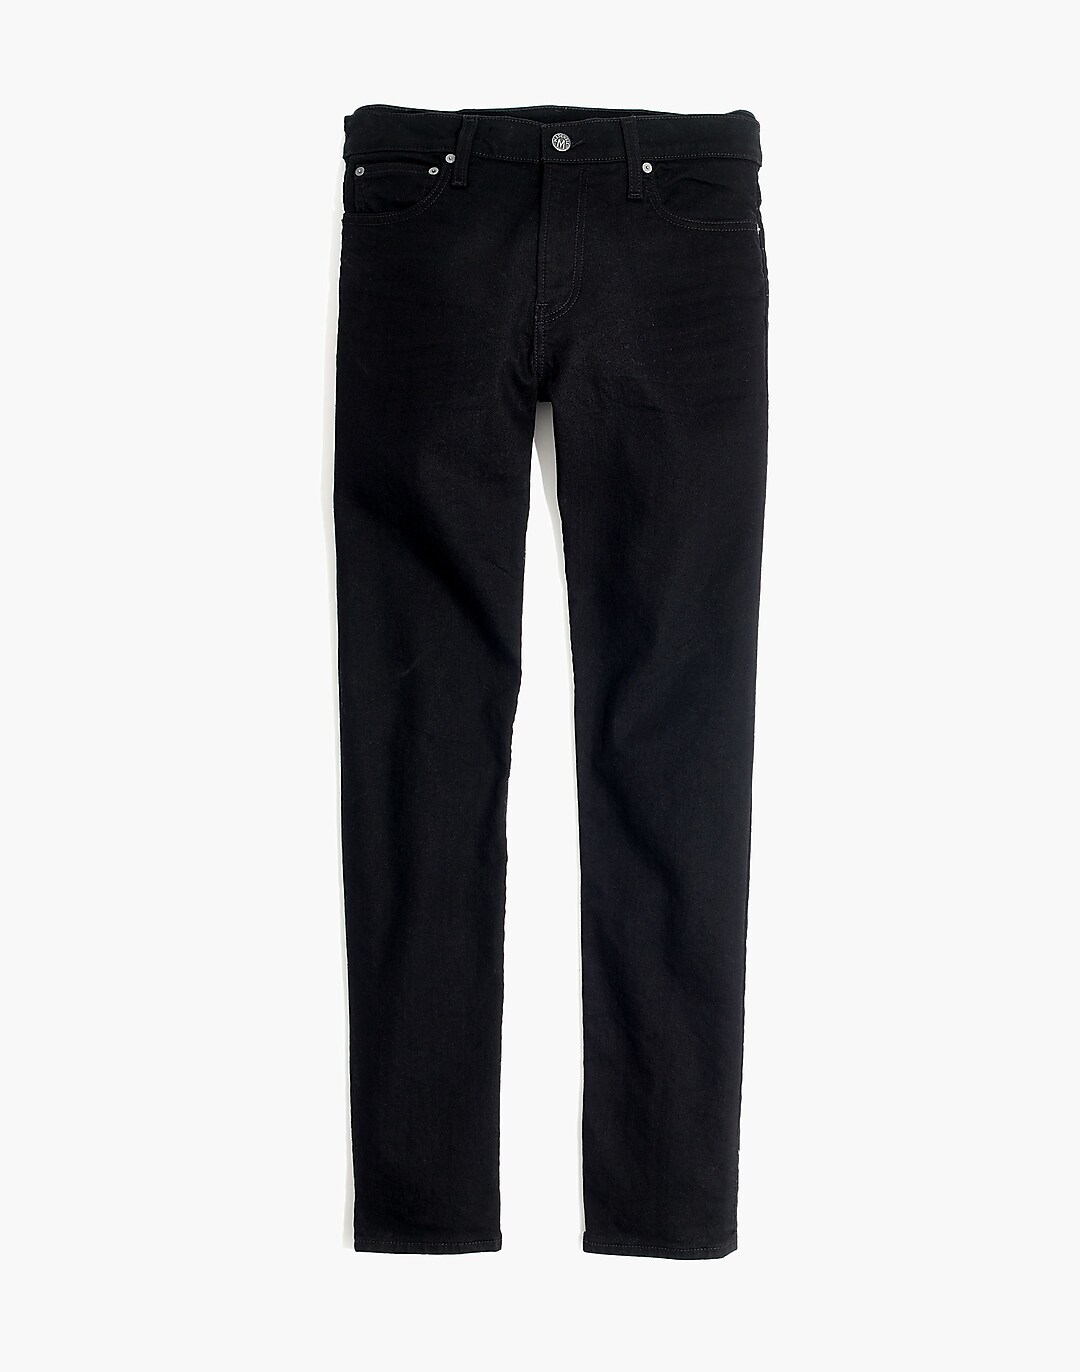 Men's Slim Authentic Flex Jeans in Black Wash | Madewell